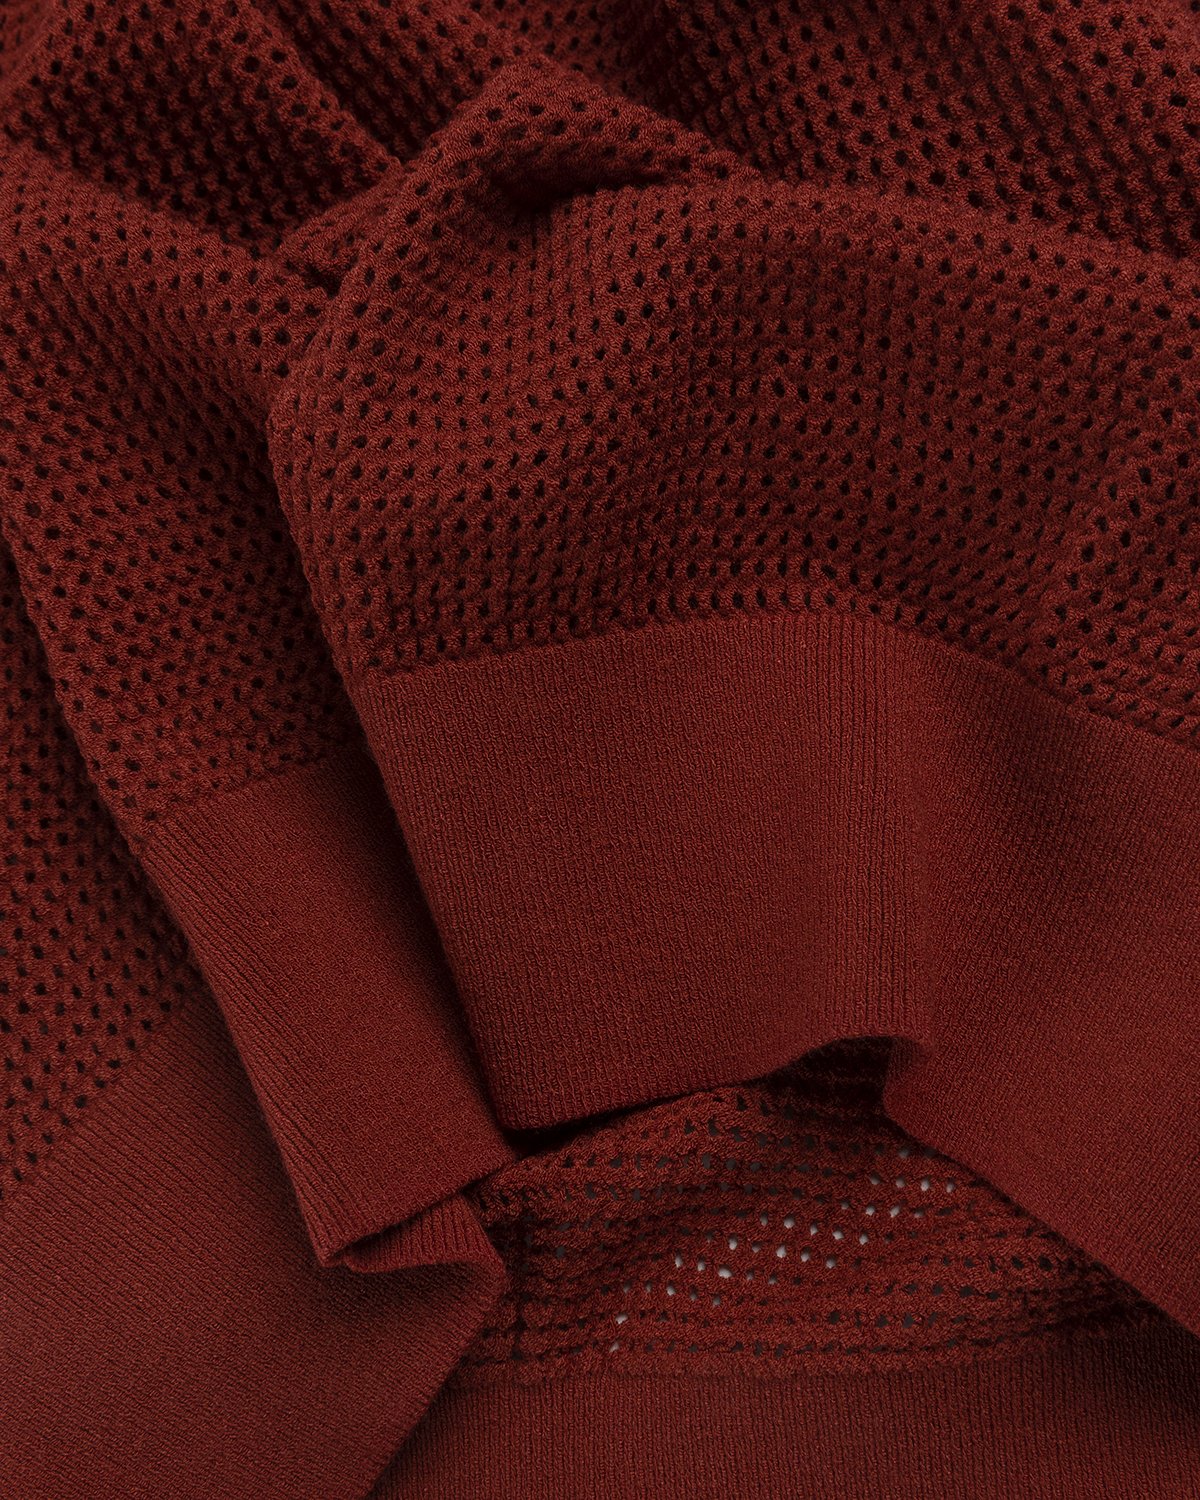 Dries van Noten - Jael Polo Shirt Brique - Clothing - Red - Image 5